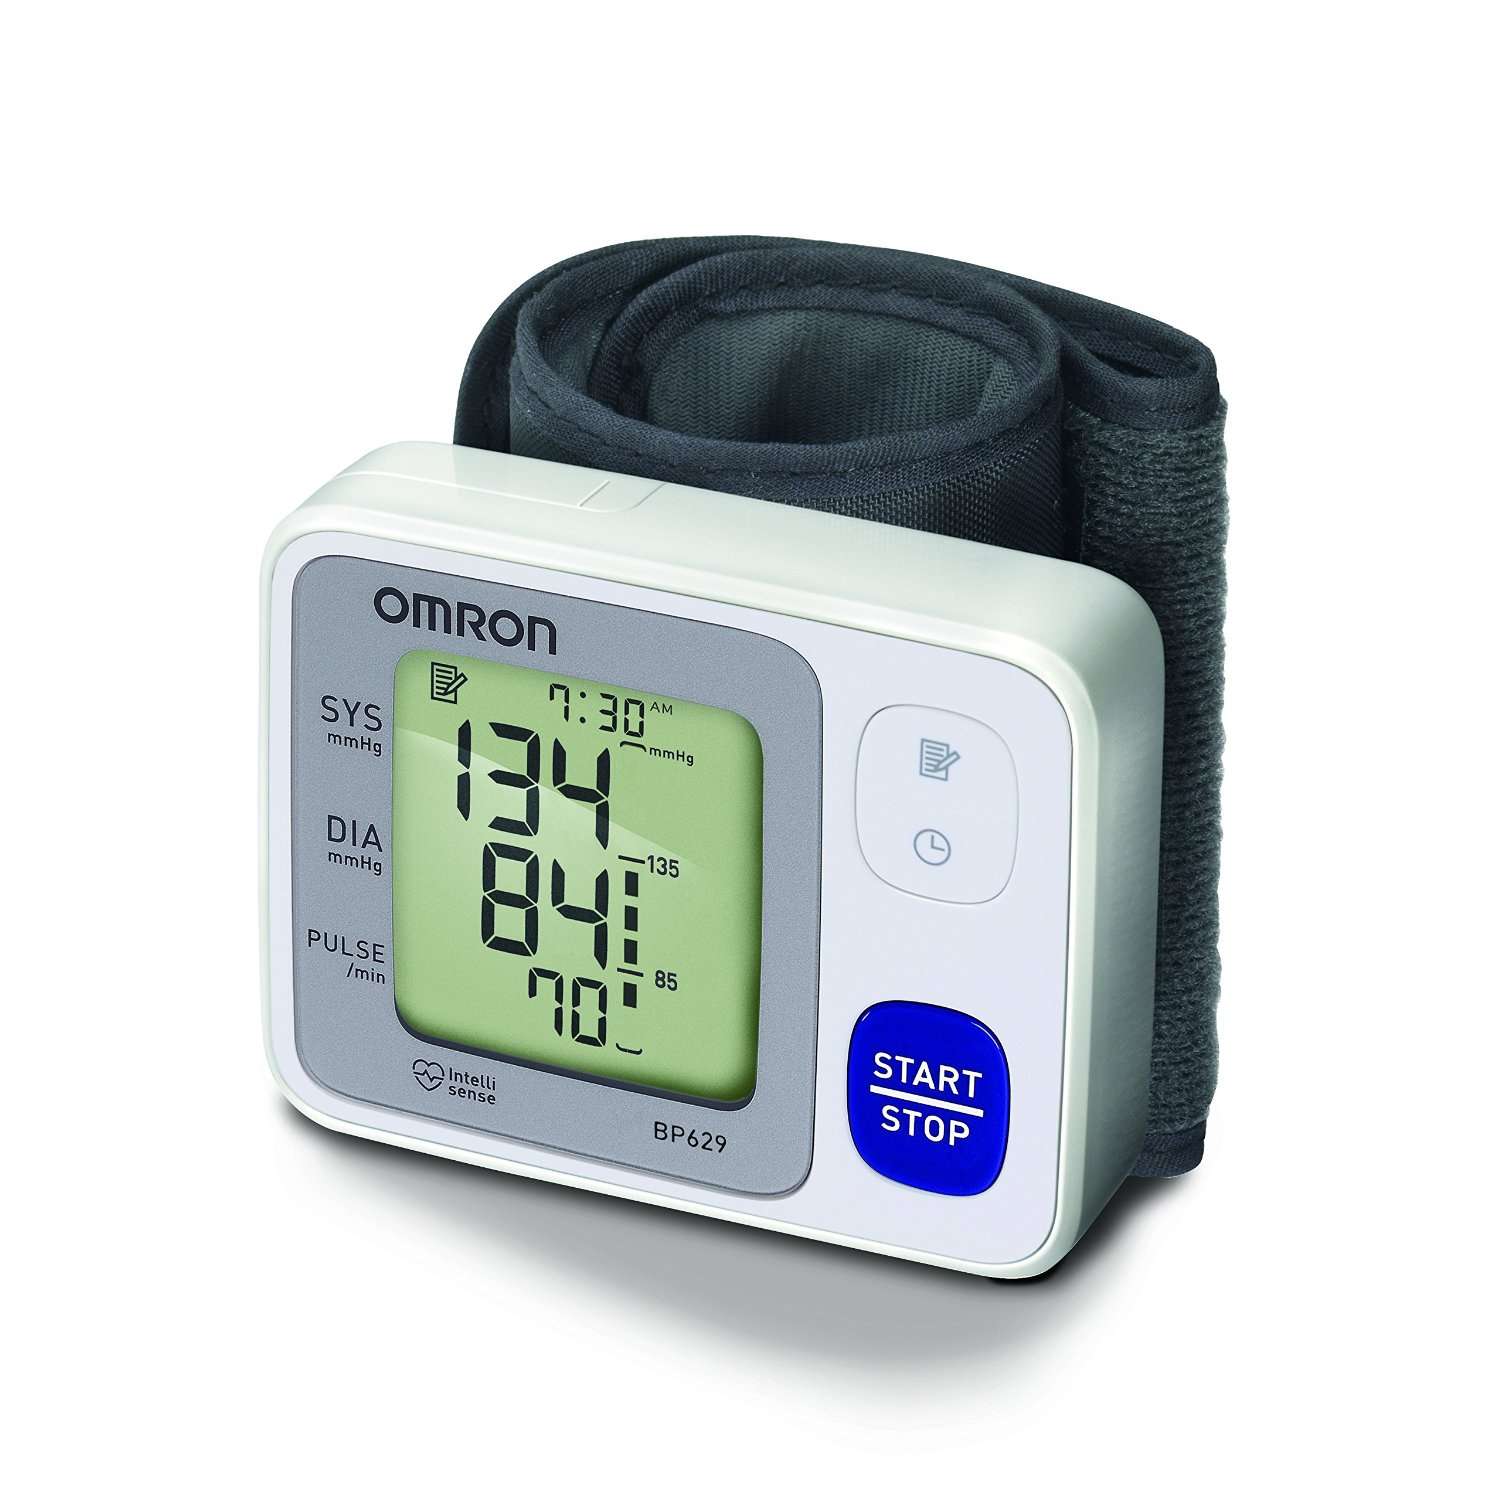 Omron 3 Series Wrist Blood Pressure Monitor (Model BP629) Clinically ...